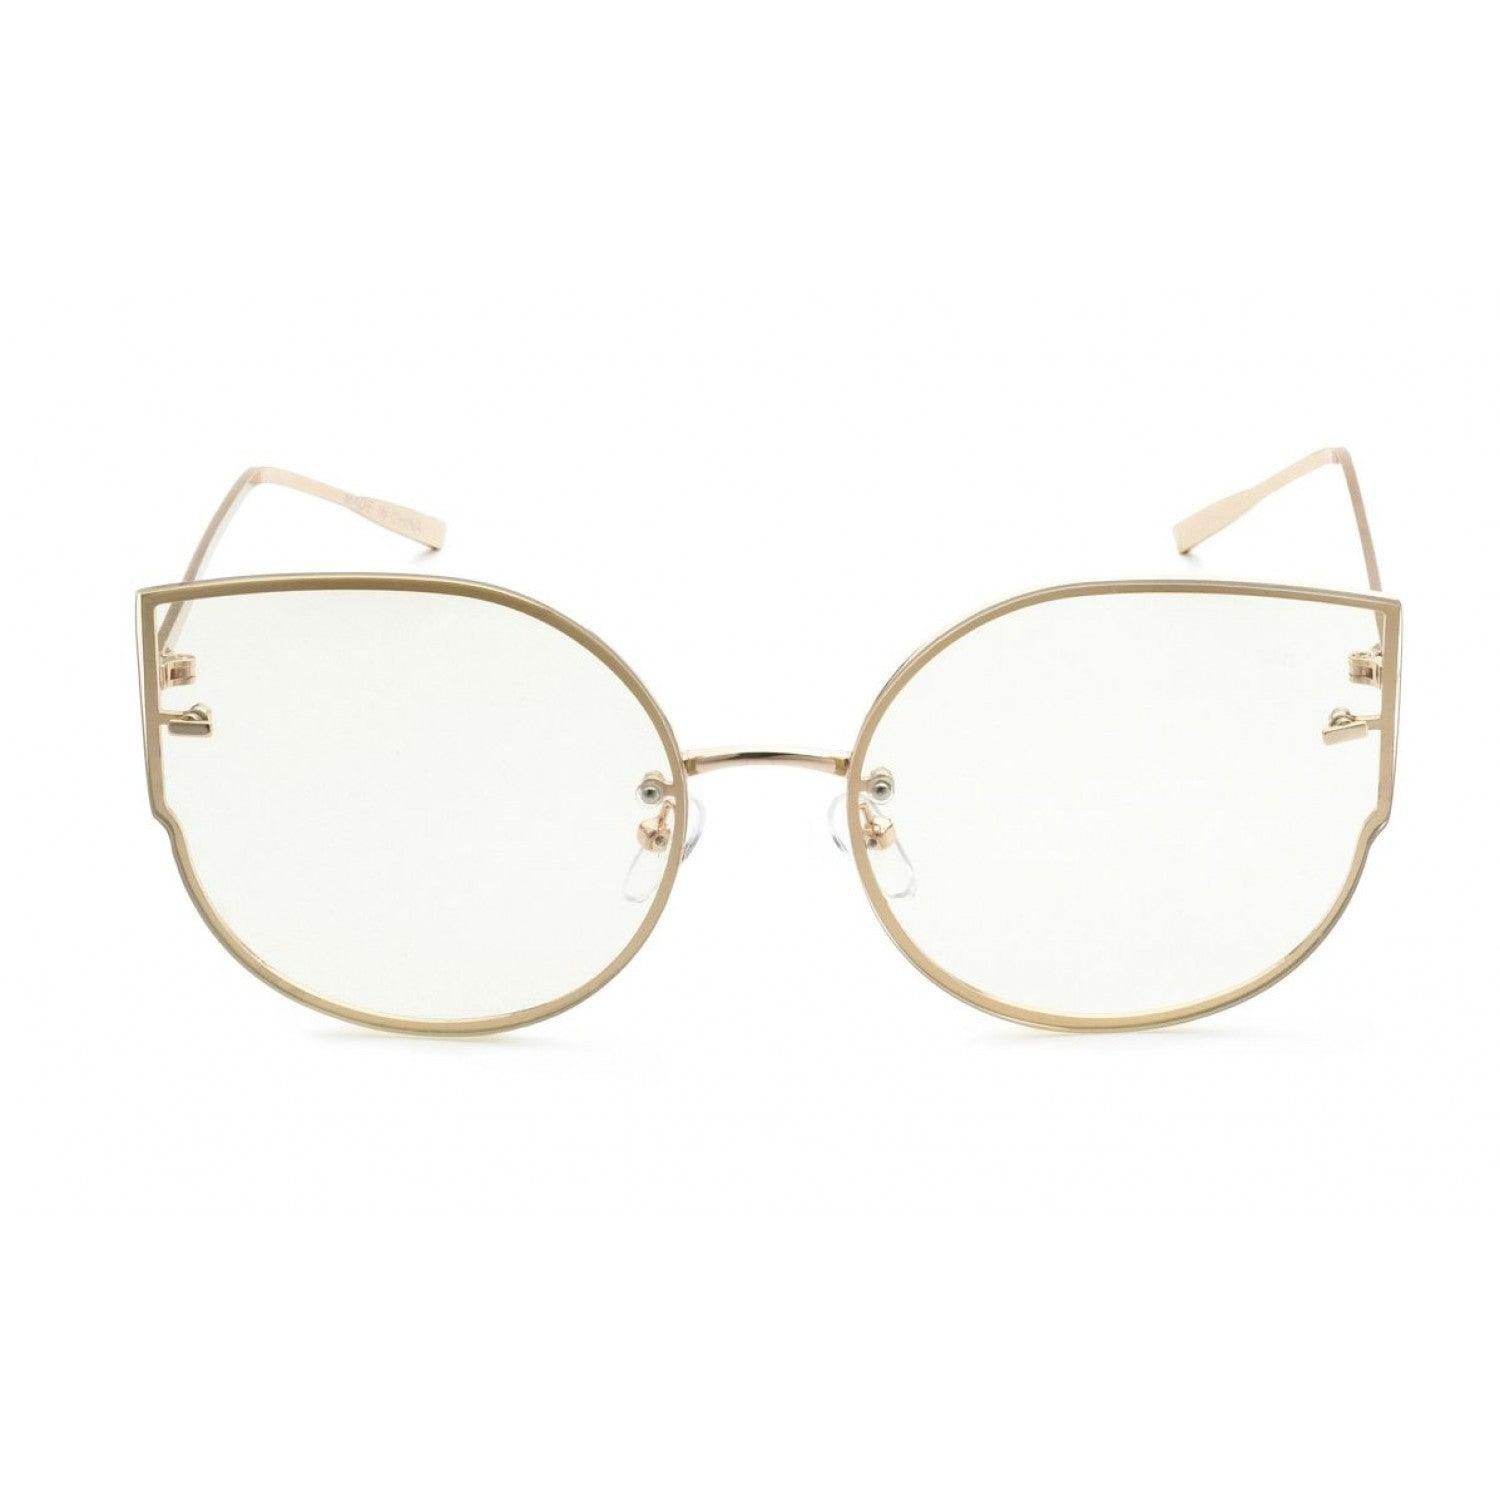 Cateye Metal Frame Glasses - Weekend Shade Sunglasses